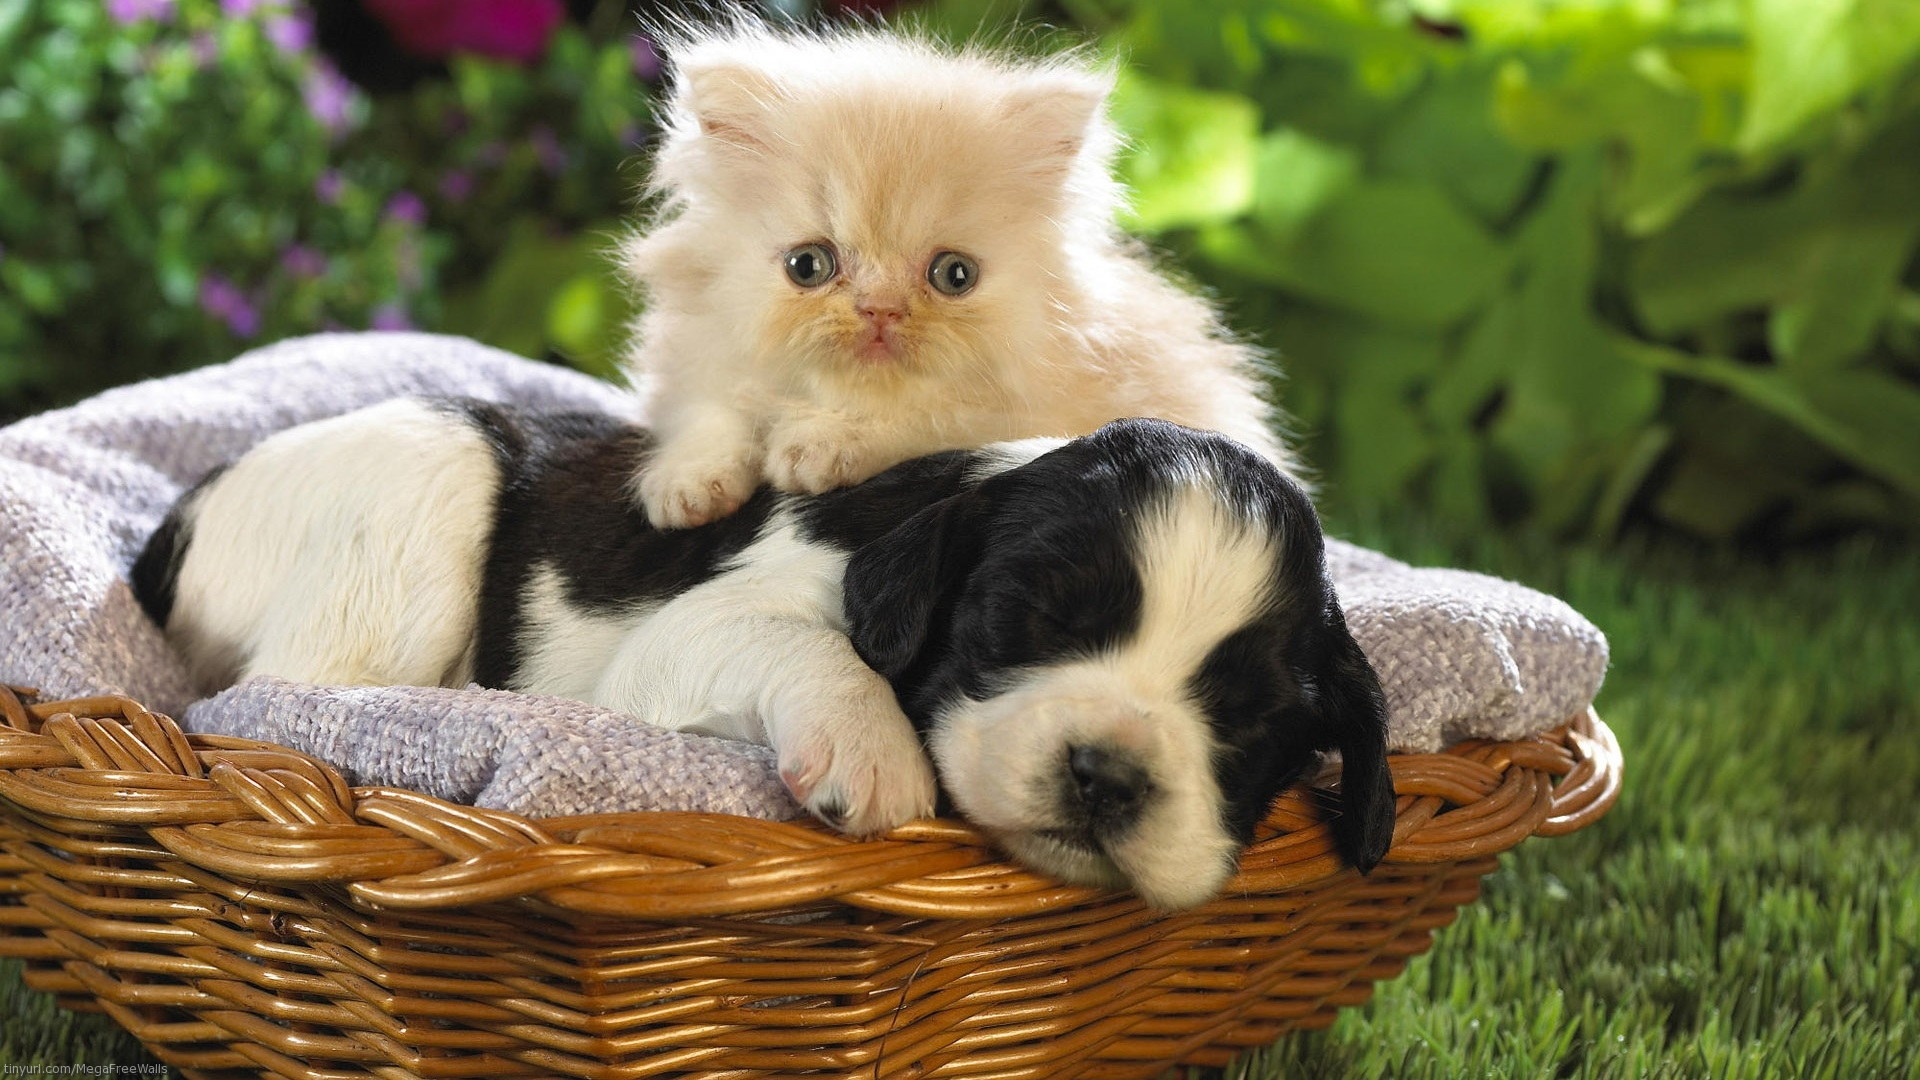 dog, animal, cat & dog, baby animal, basket, cat, cute, kitten, puppy